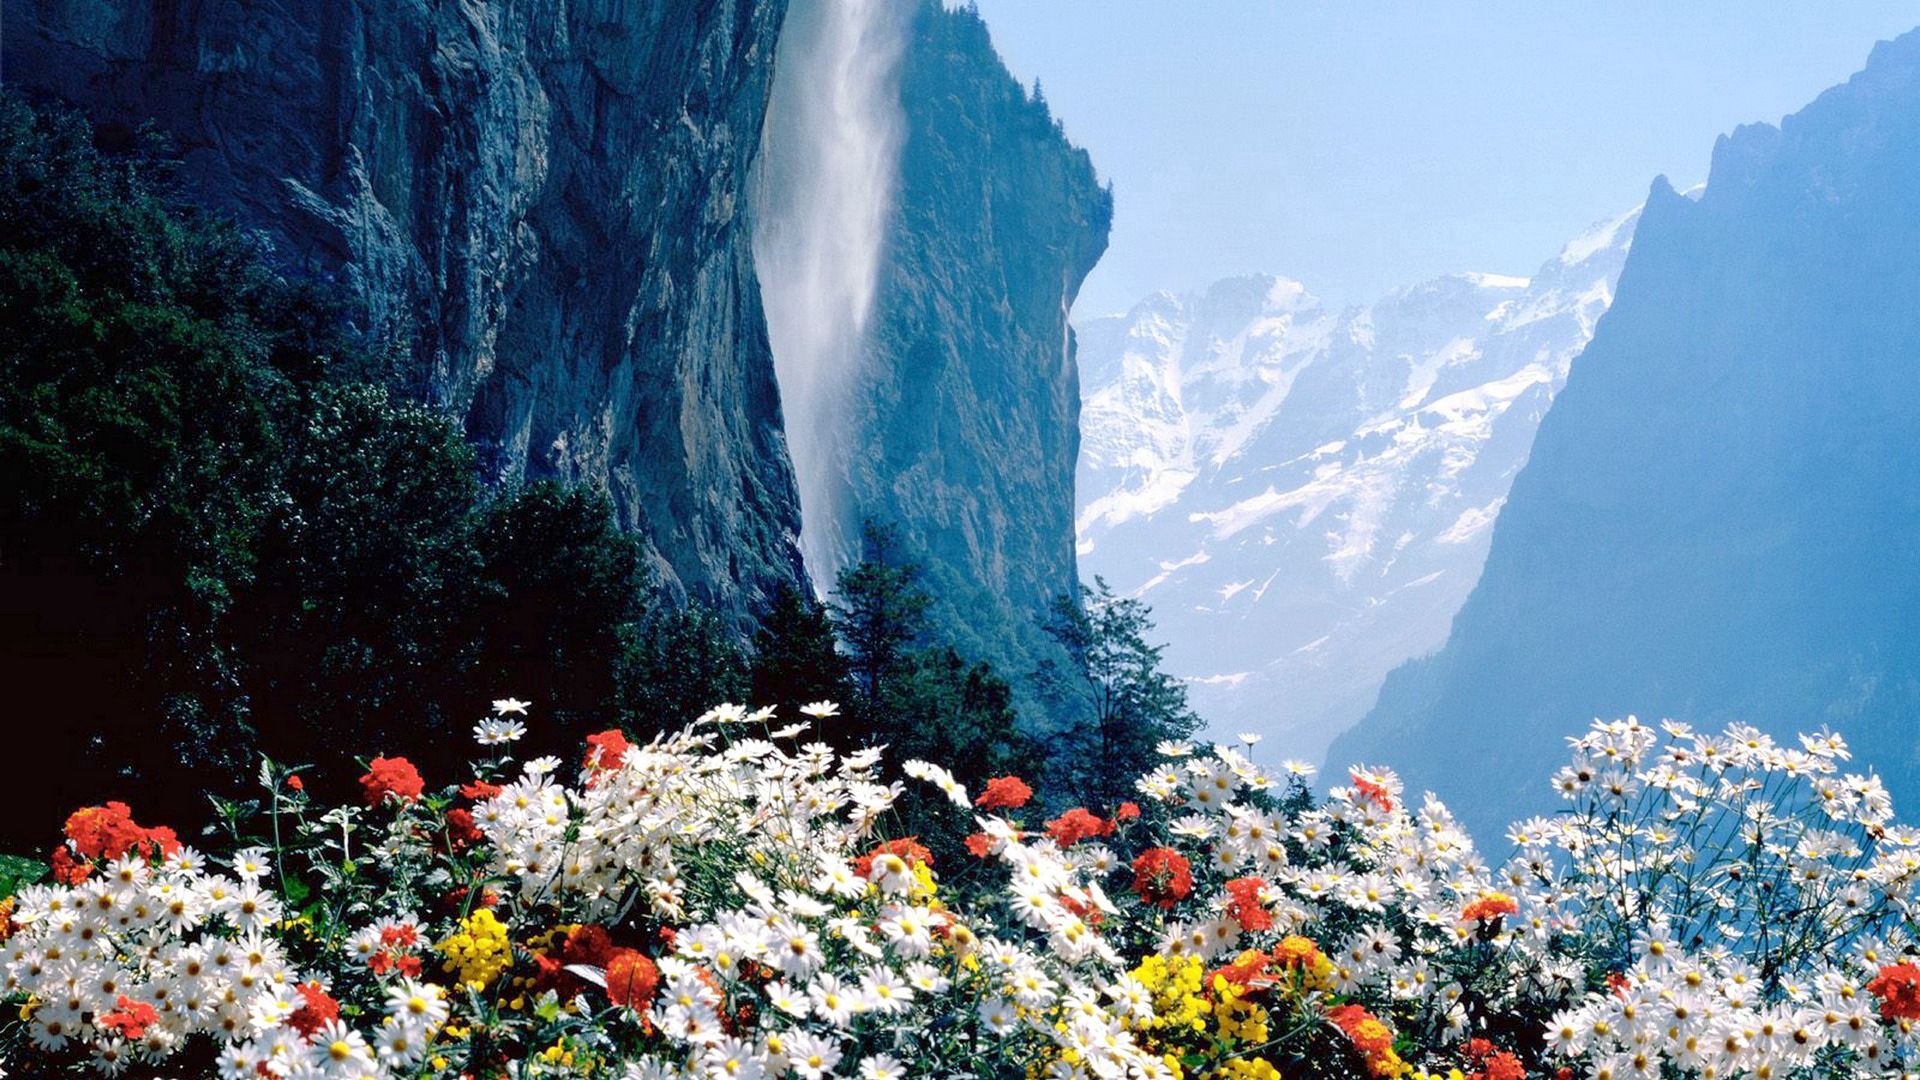 94469 descargar imagen flores, naturaleza, montañas, rotura, precipicio: fondos de pantalla y protectores de pantalla gratis